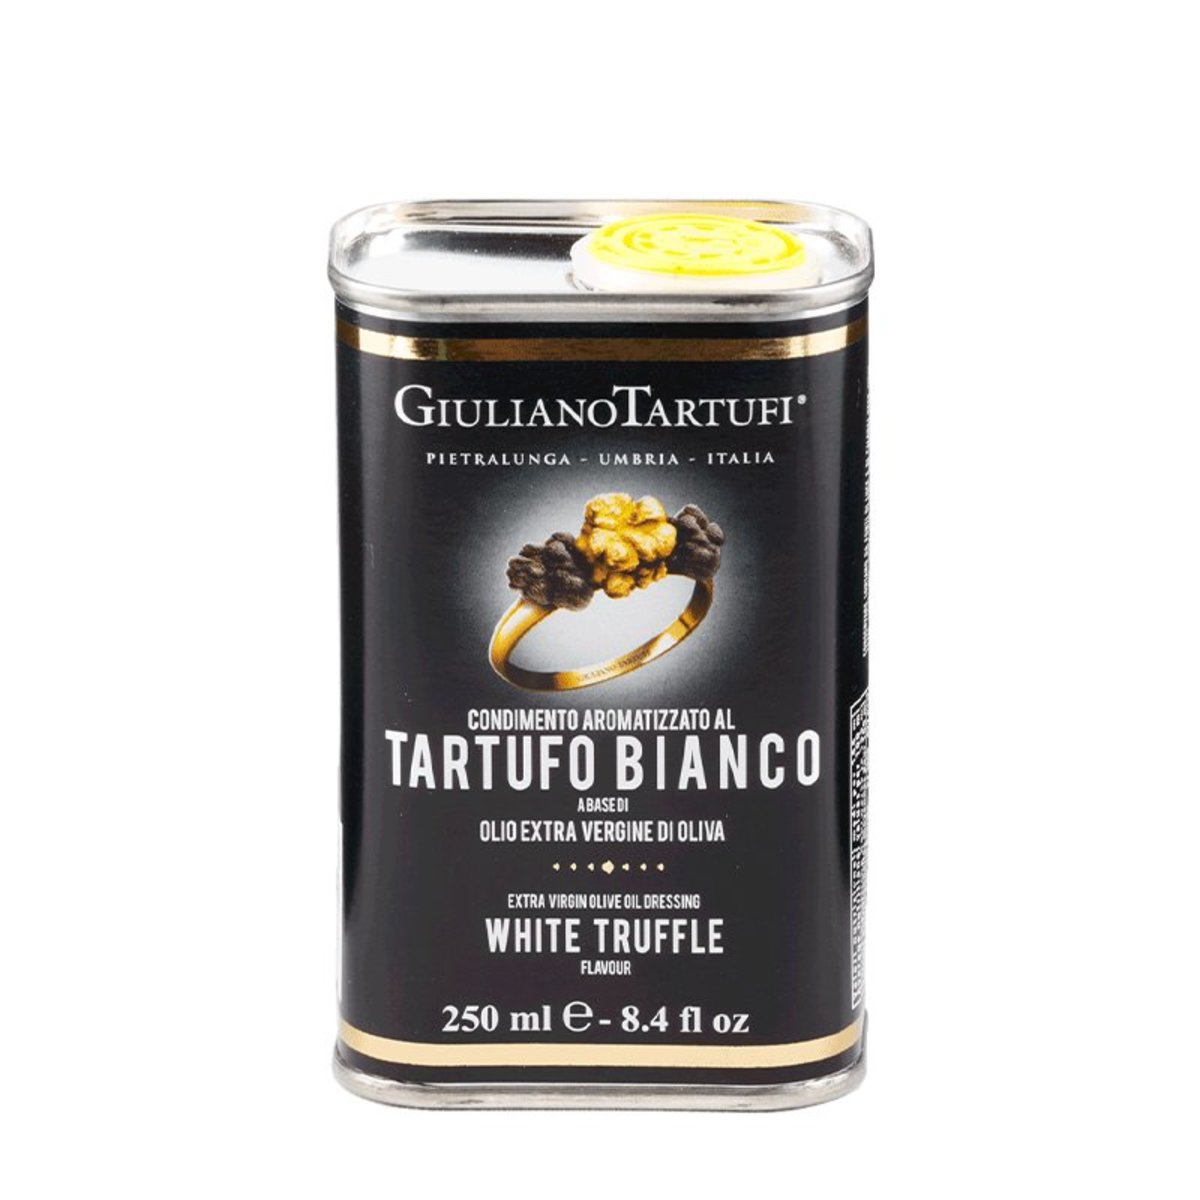 Giuliano Tartufi - White Truffle Flavoured Extra Virgin Olive Oil (Can)